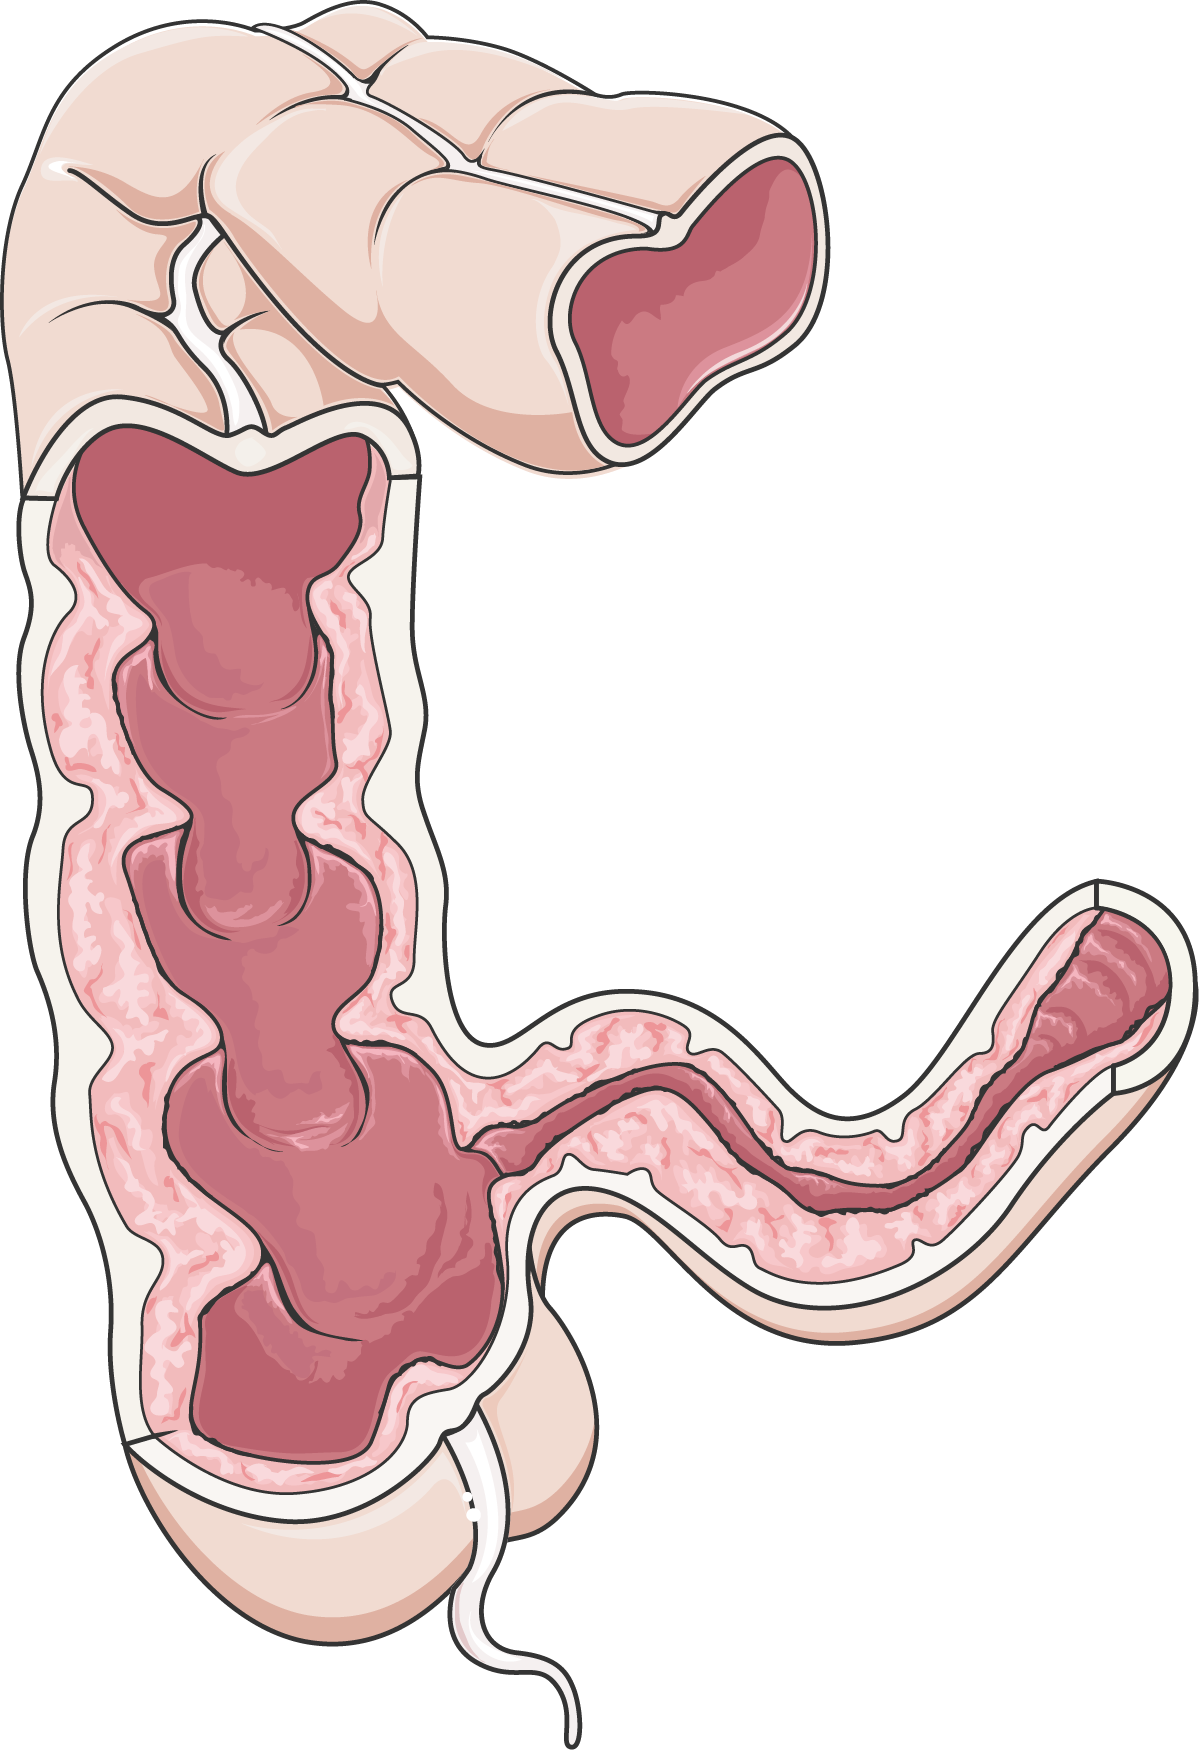 disease clipart crohn's disease